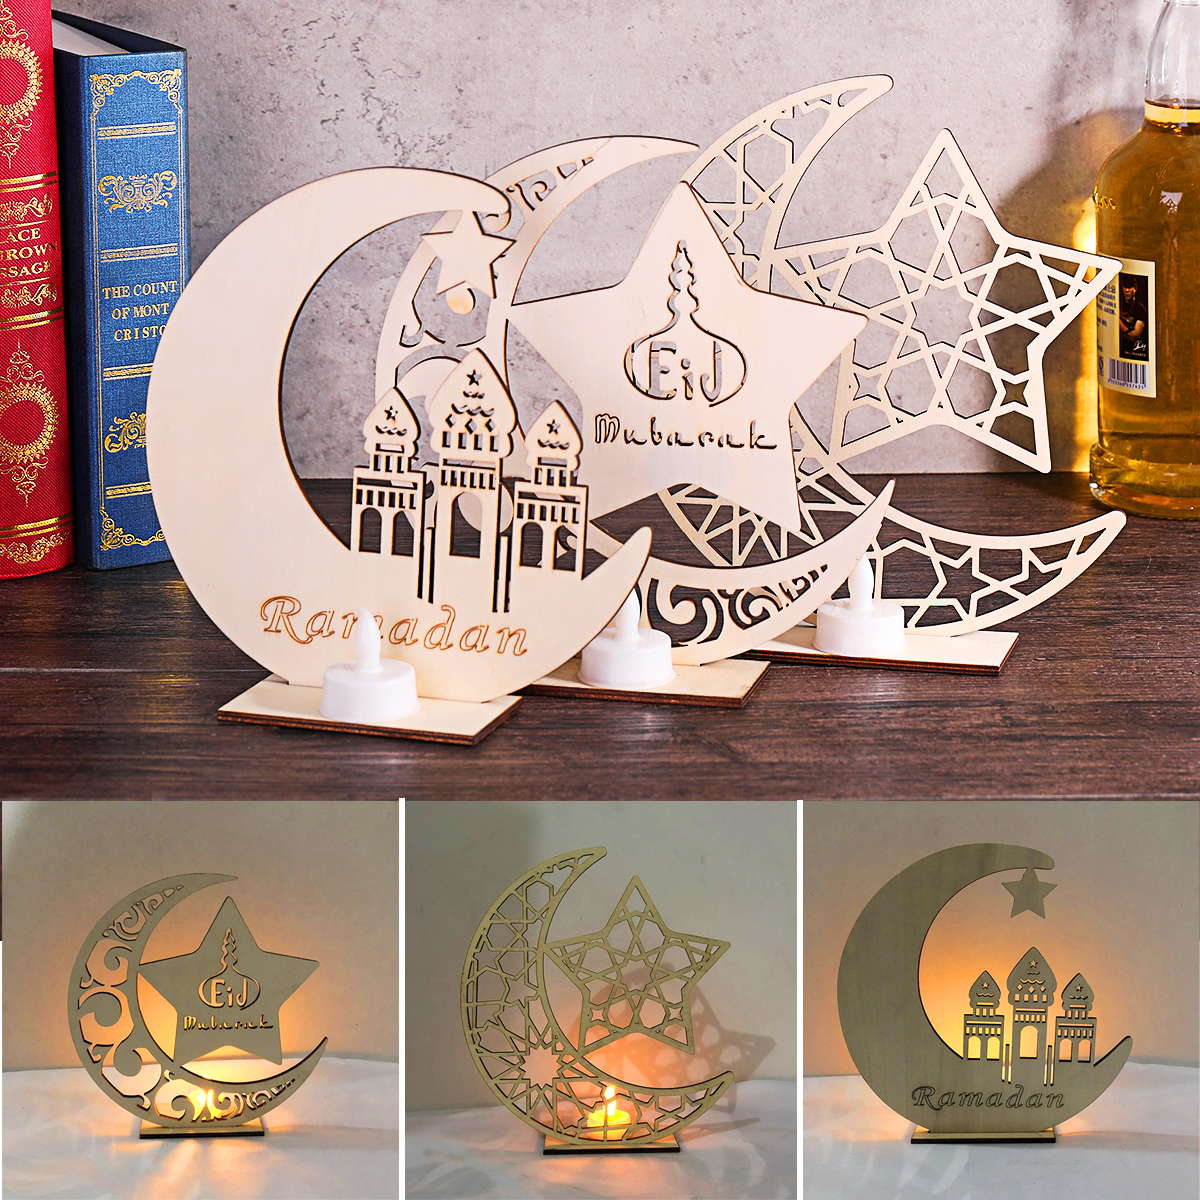 3 Types Eid Mubarak Moon Decoration Wooden Islam Mosque Plaque Pendant Ramadan Decorations